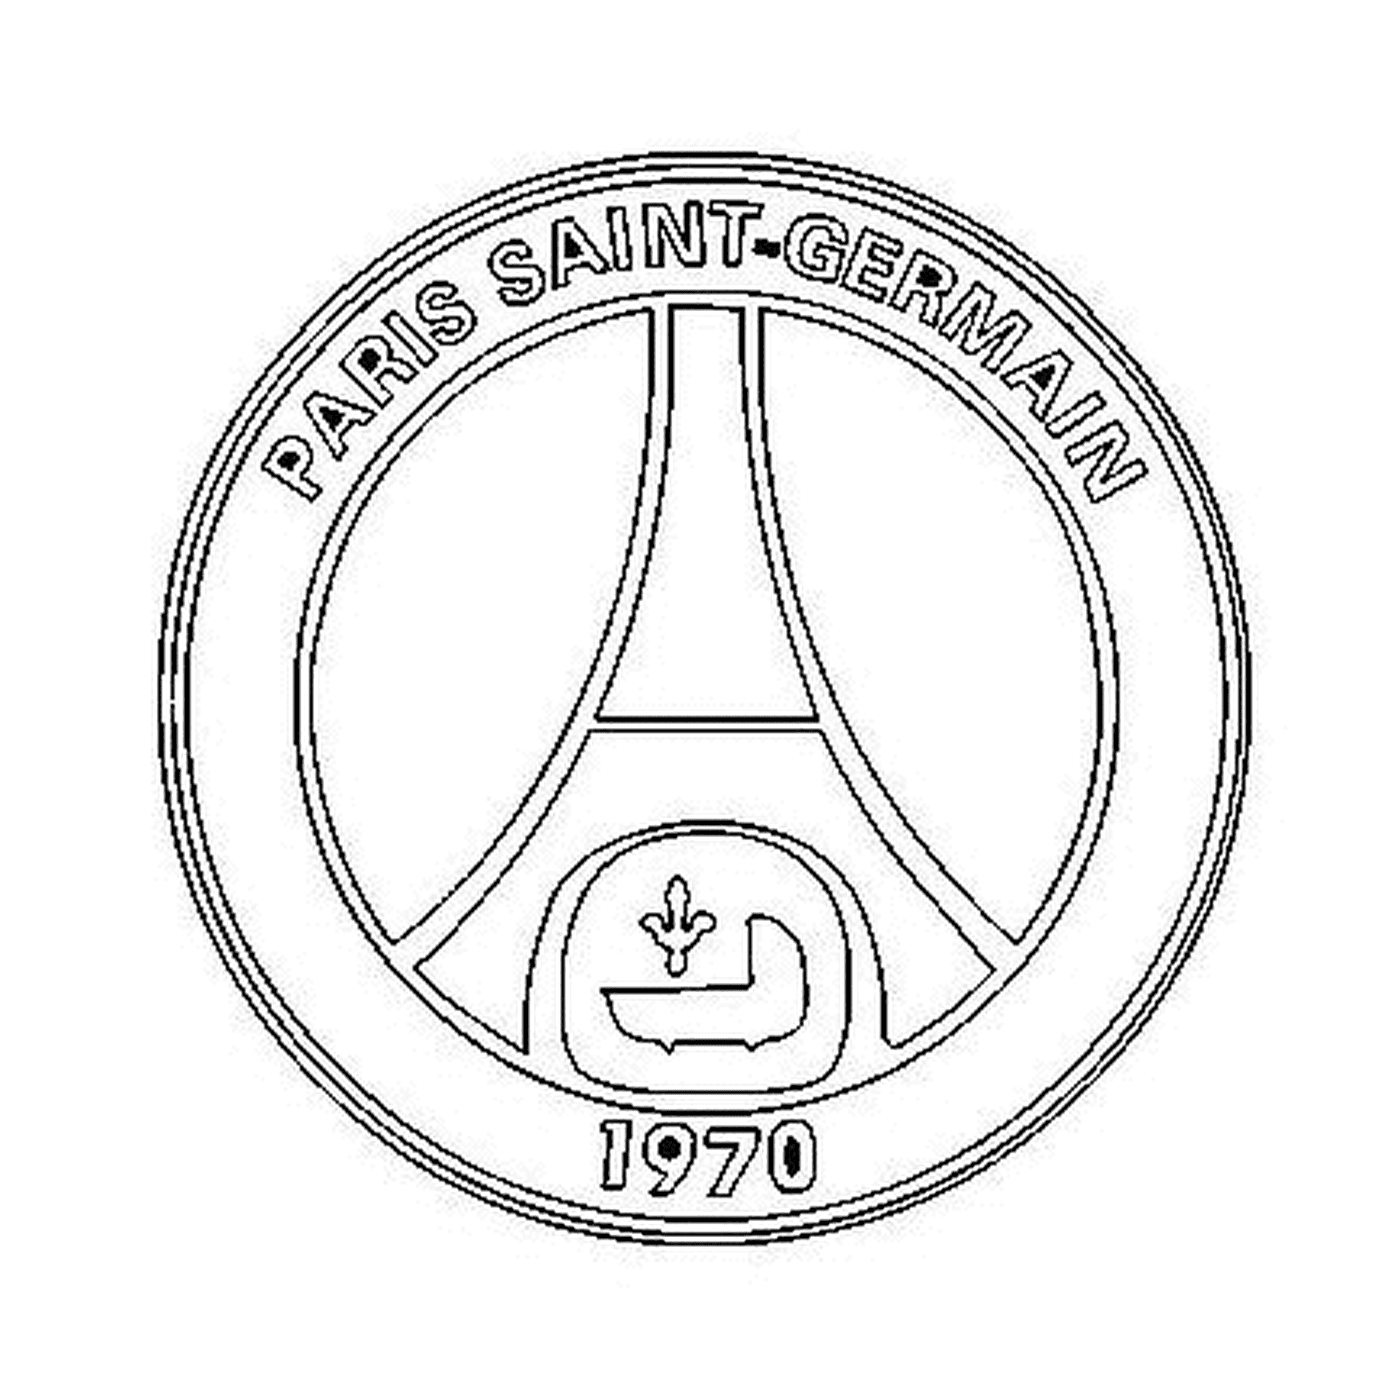  Logo of Paris Saint-Germain 